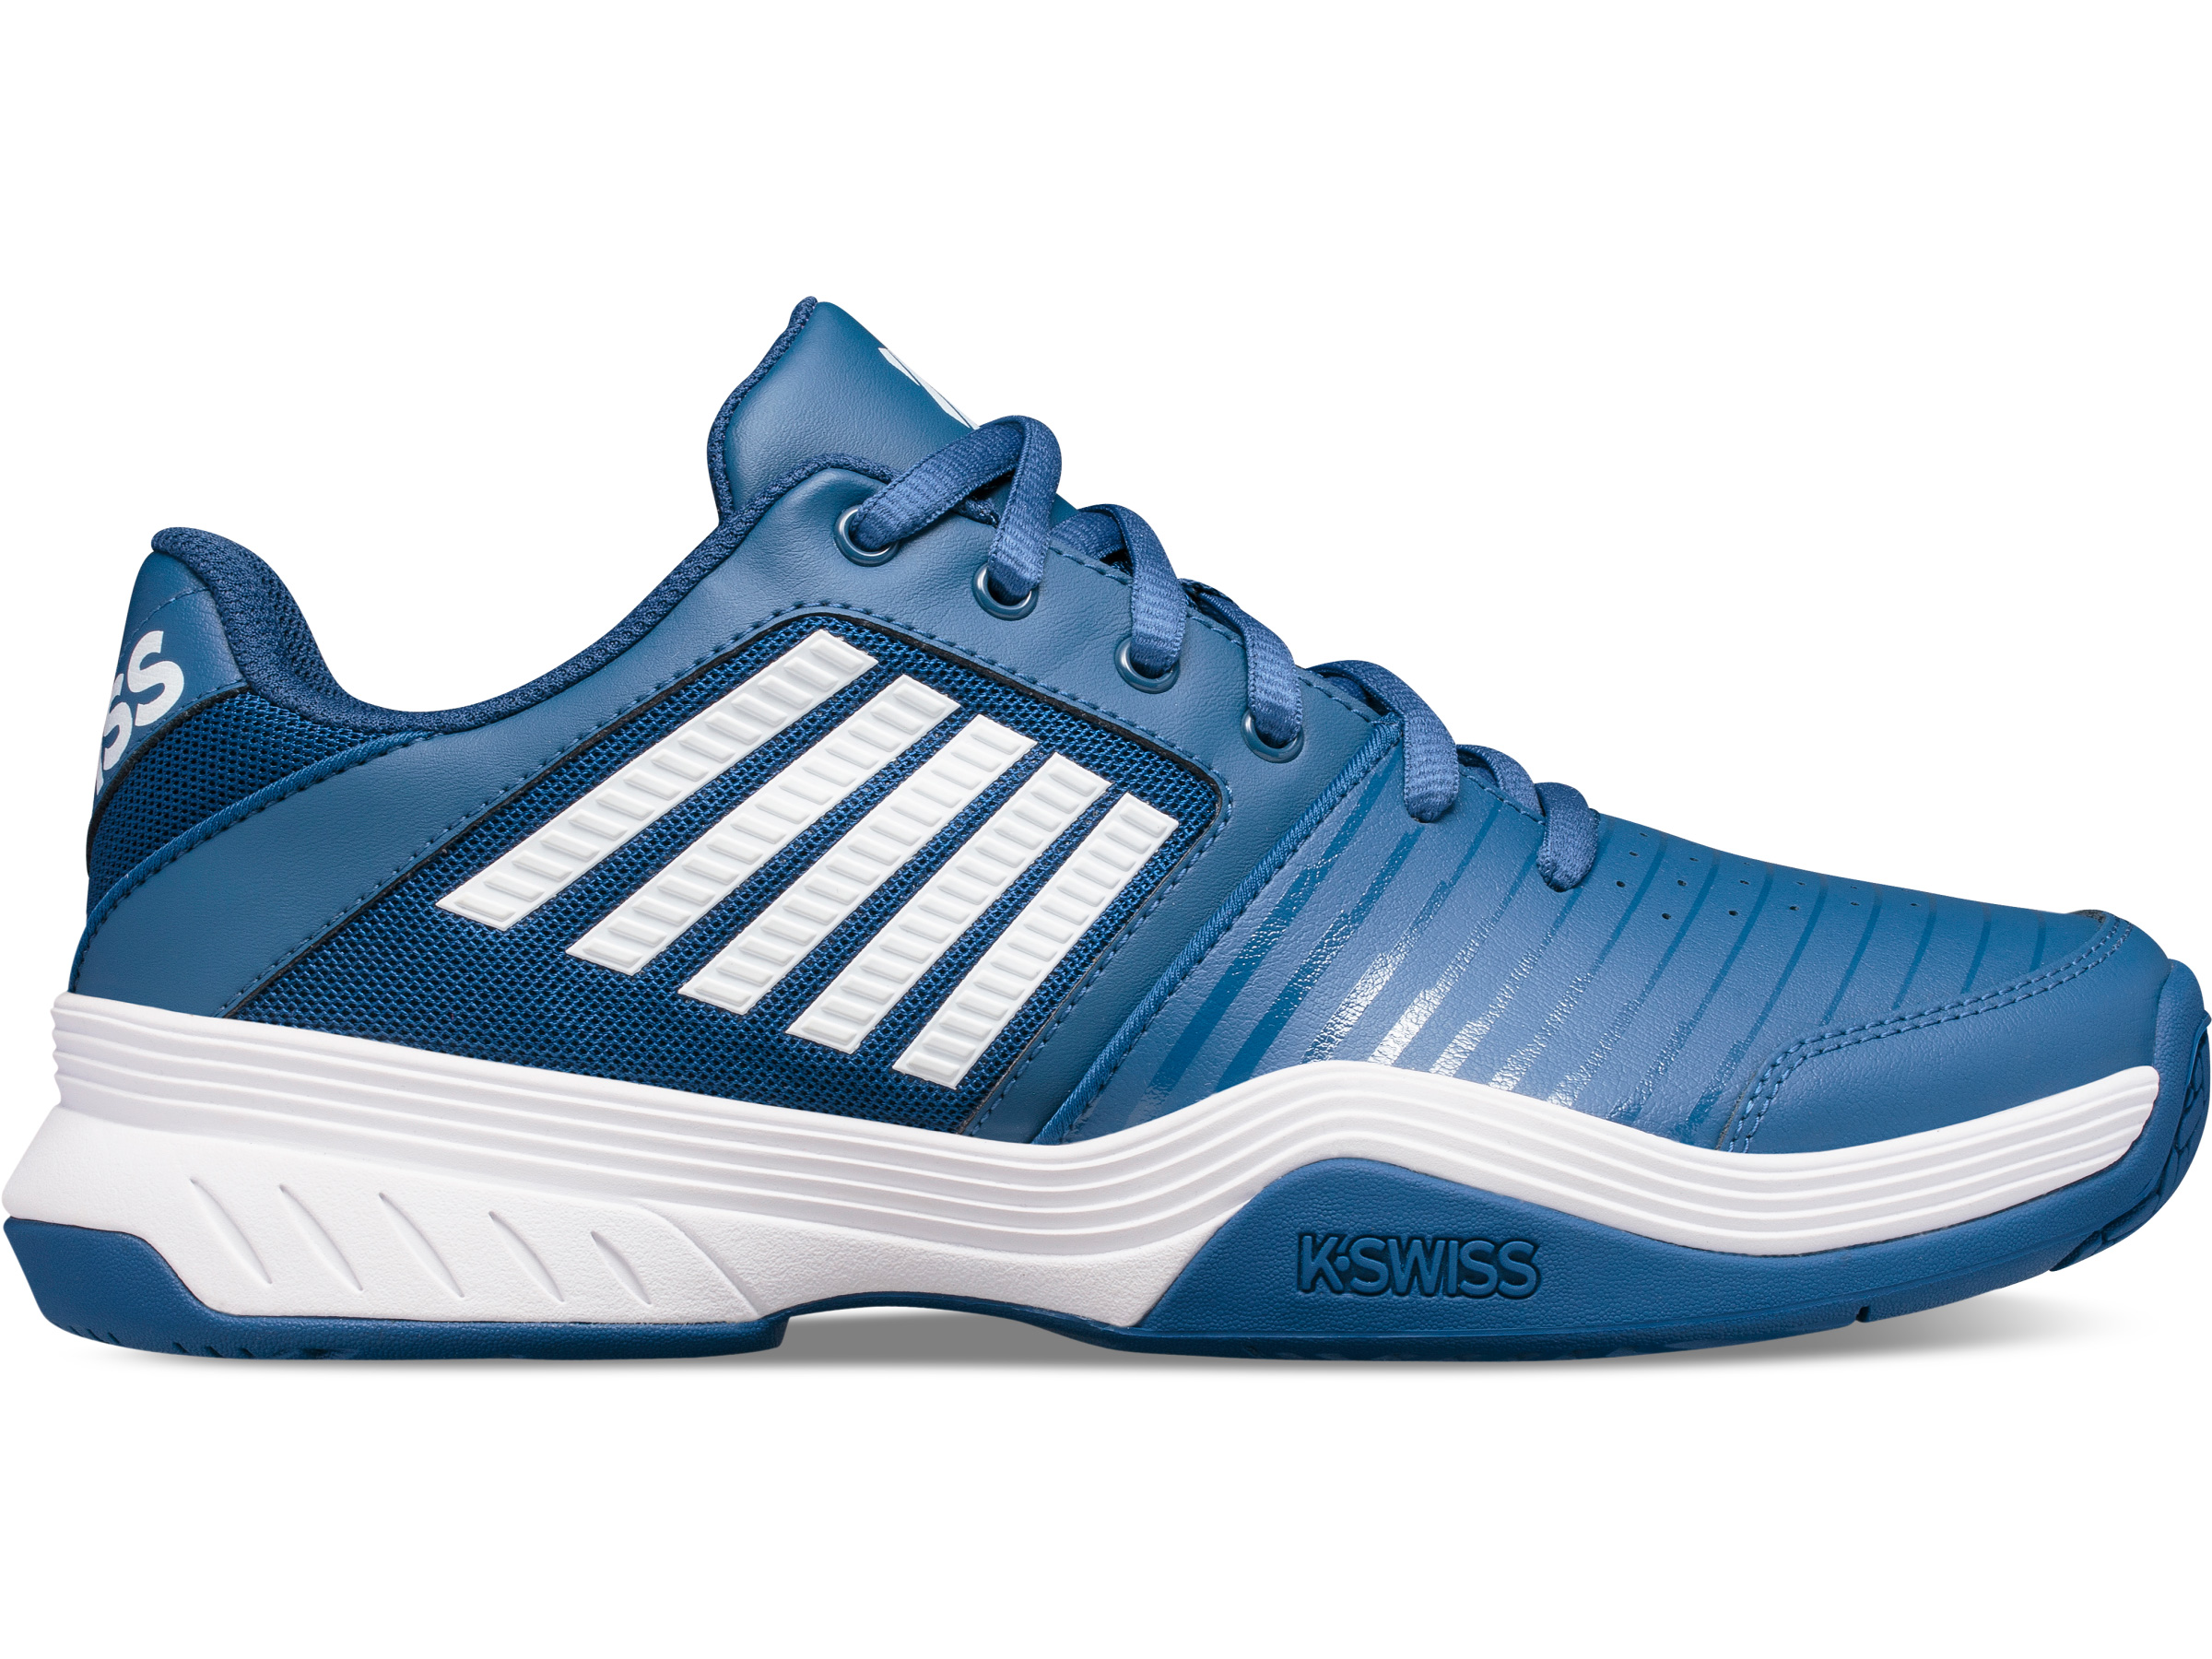 k swiss blue tennis shoes